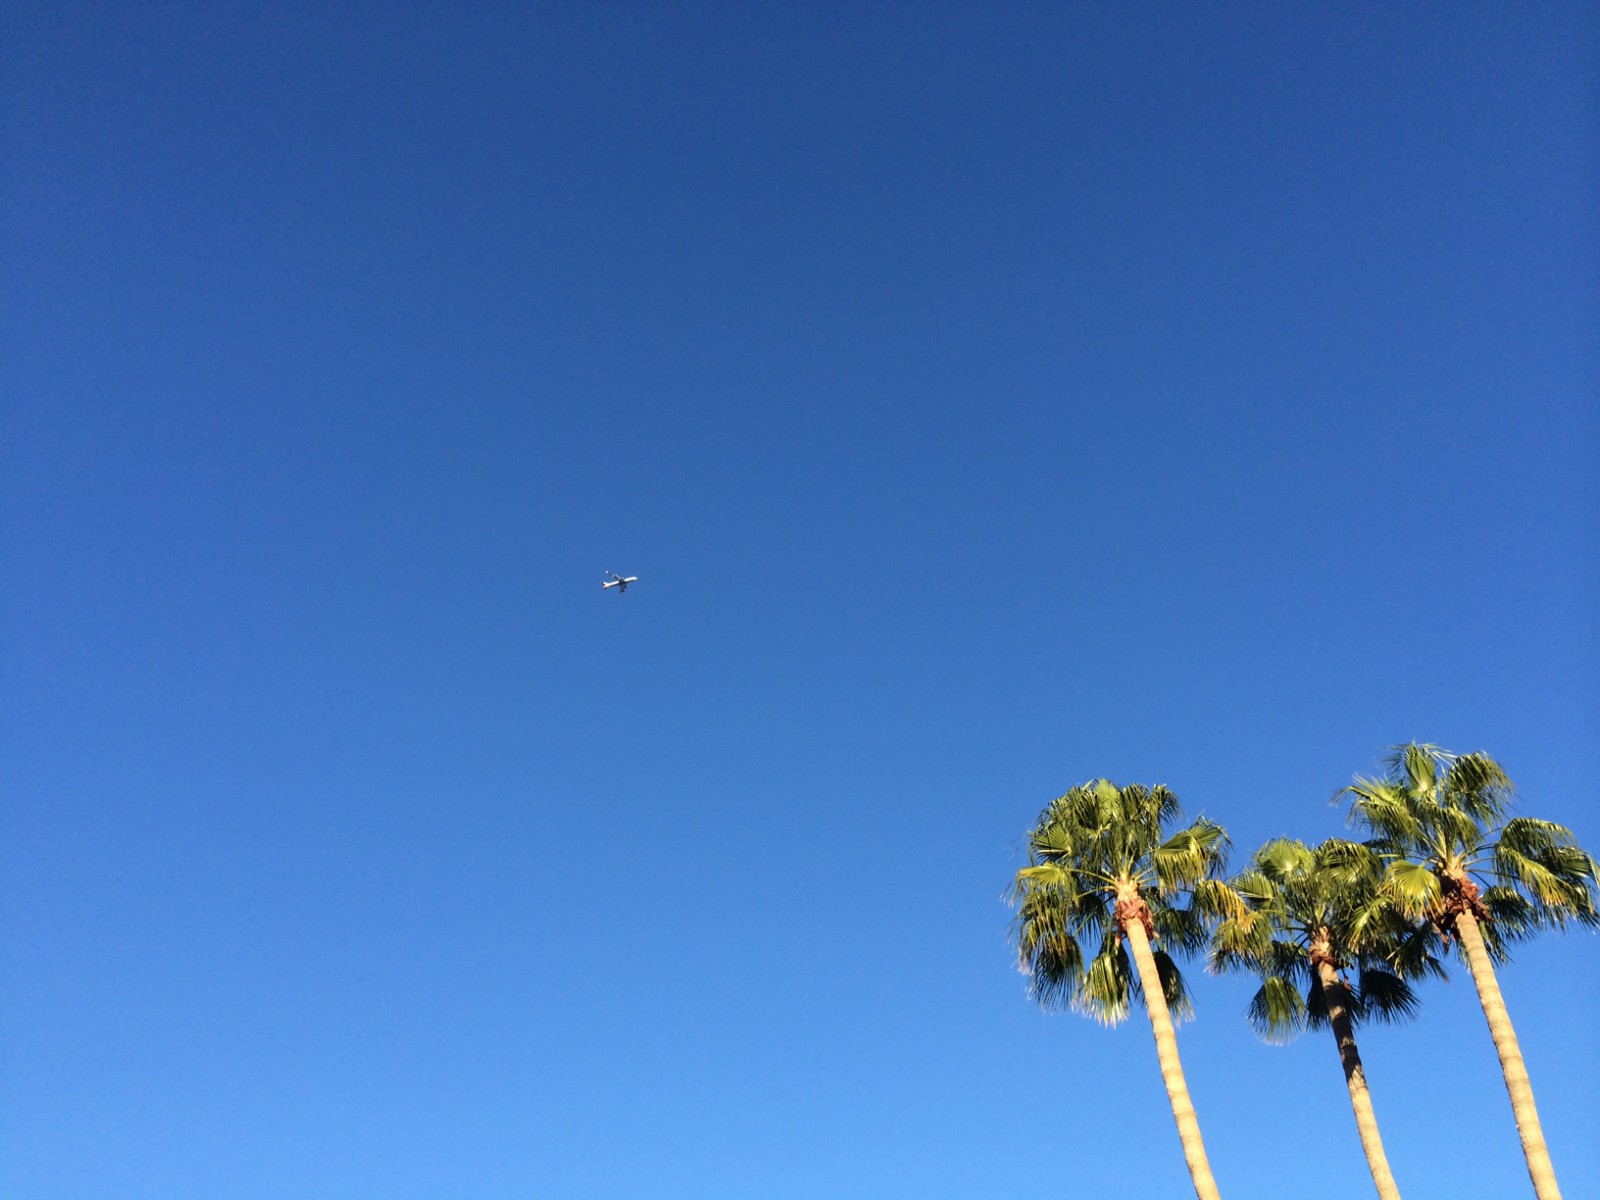 BA289 landing in once again clear skies over Phoenix.